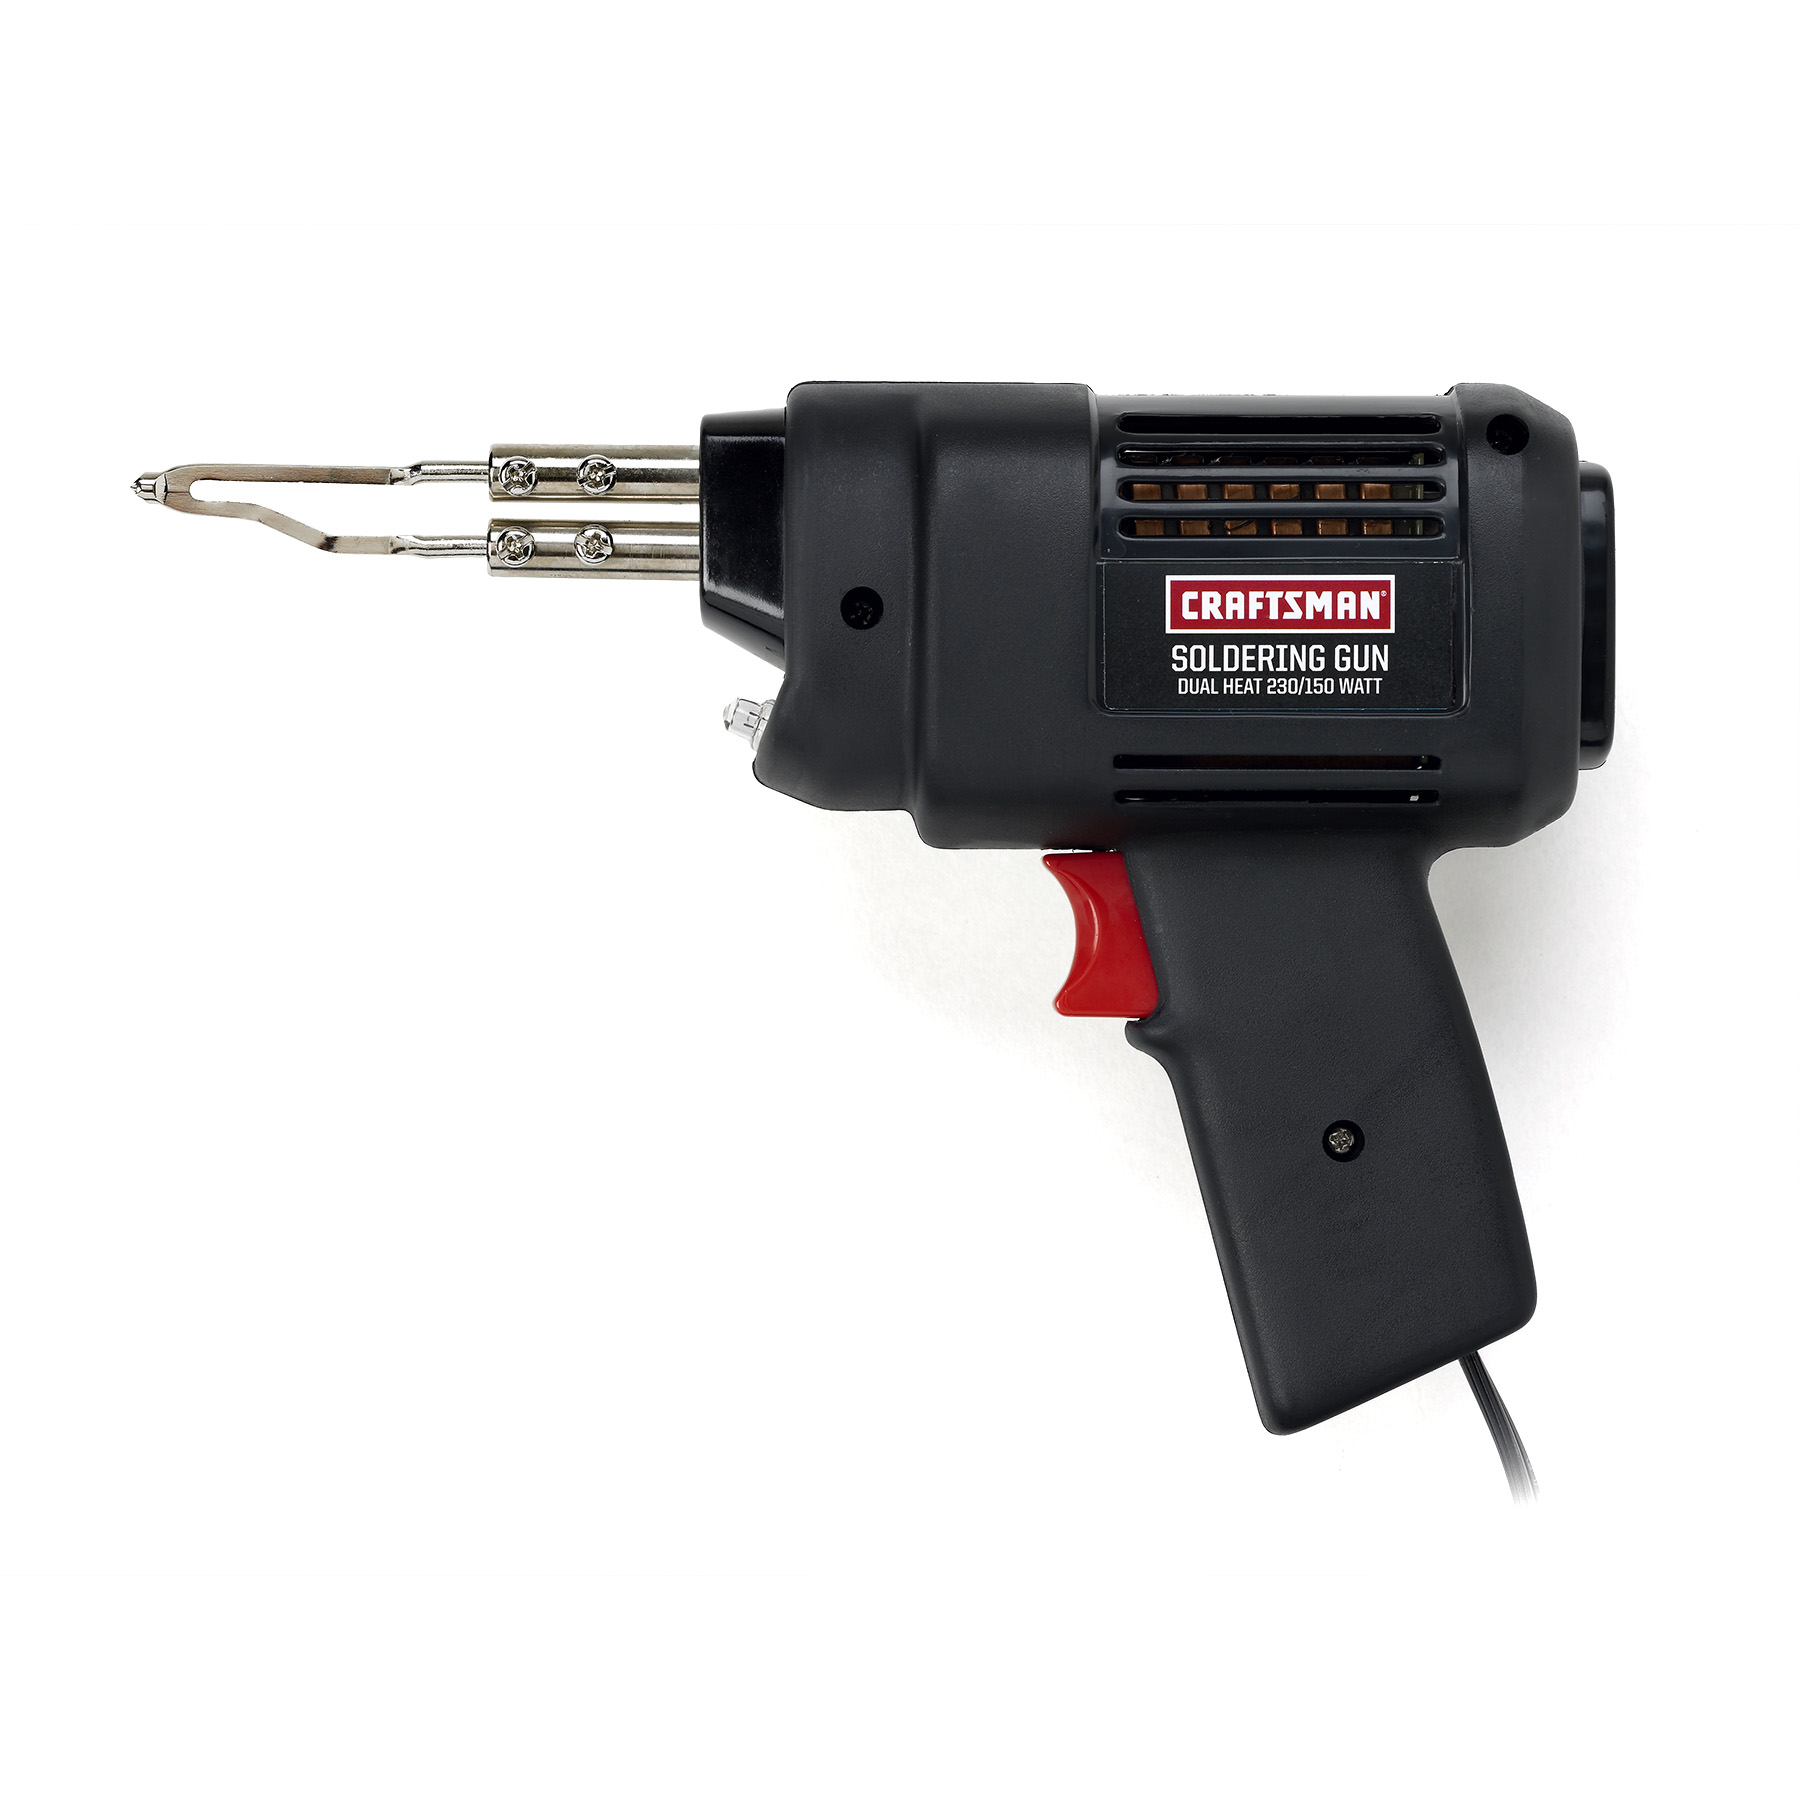 Craftsman - 54046 - Solder Gun, 150/230 watt | Sears Outlet